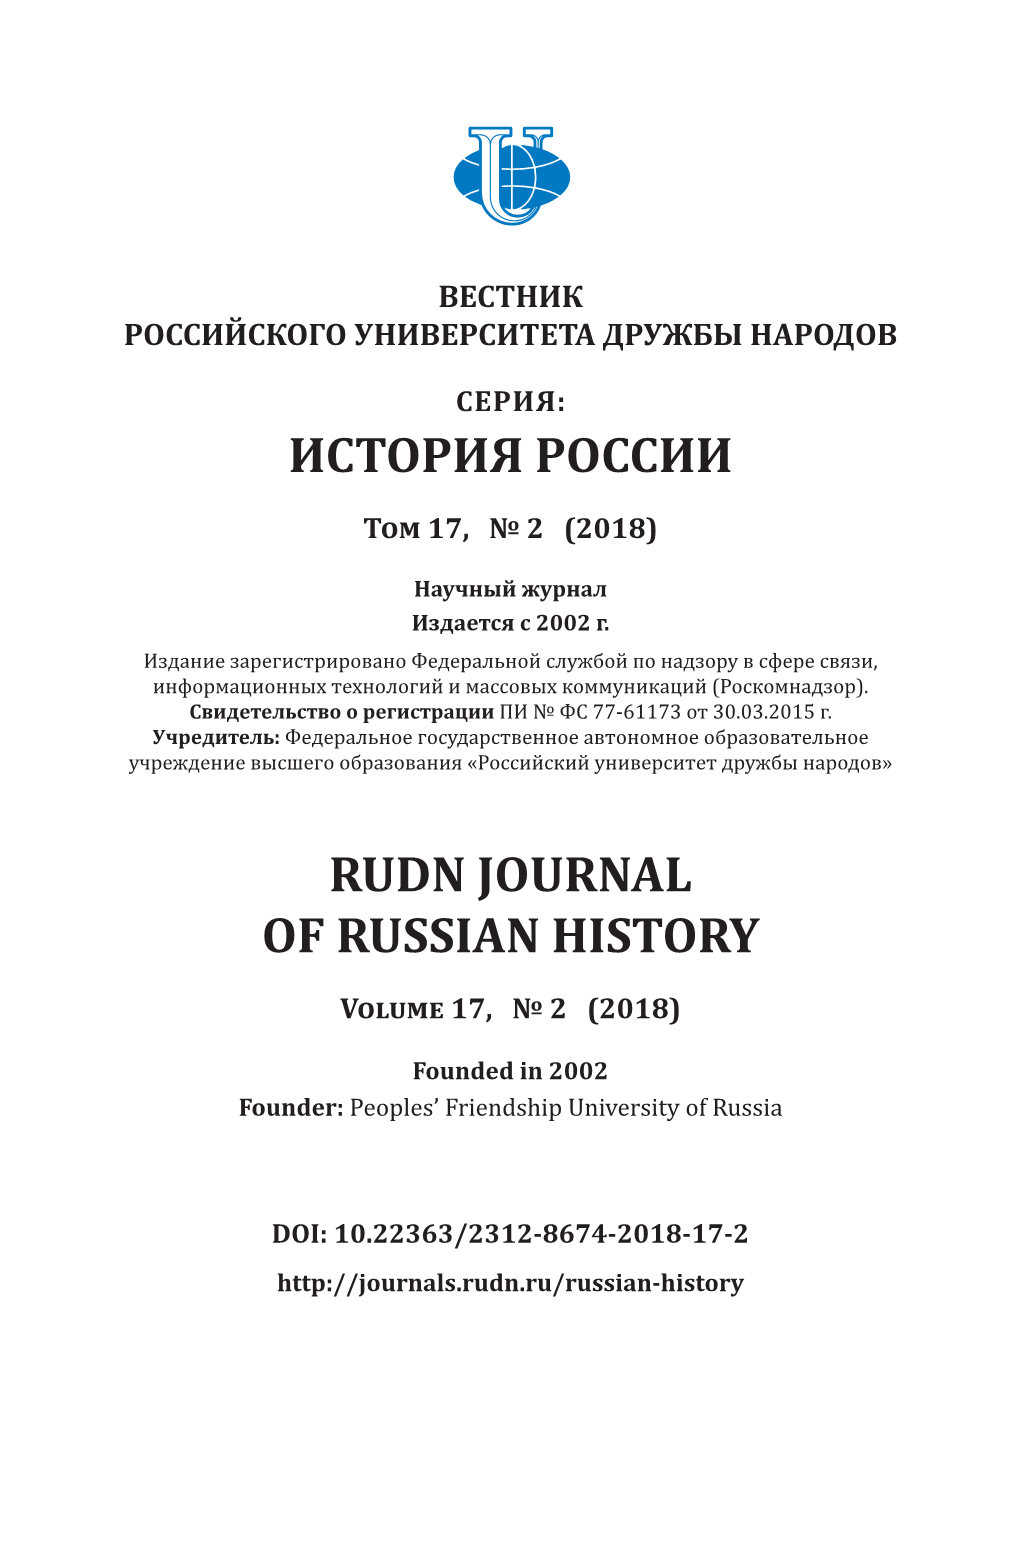 История России Rudn Journal of Russian History